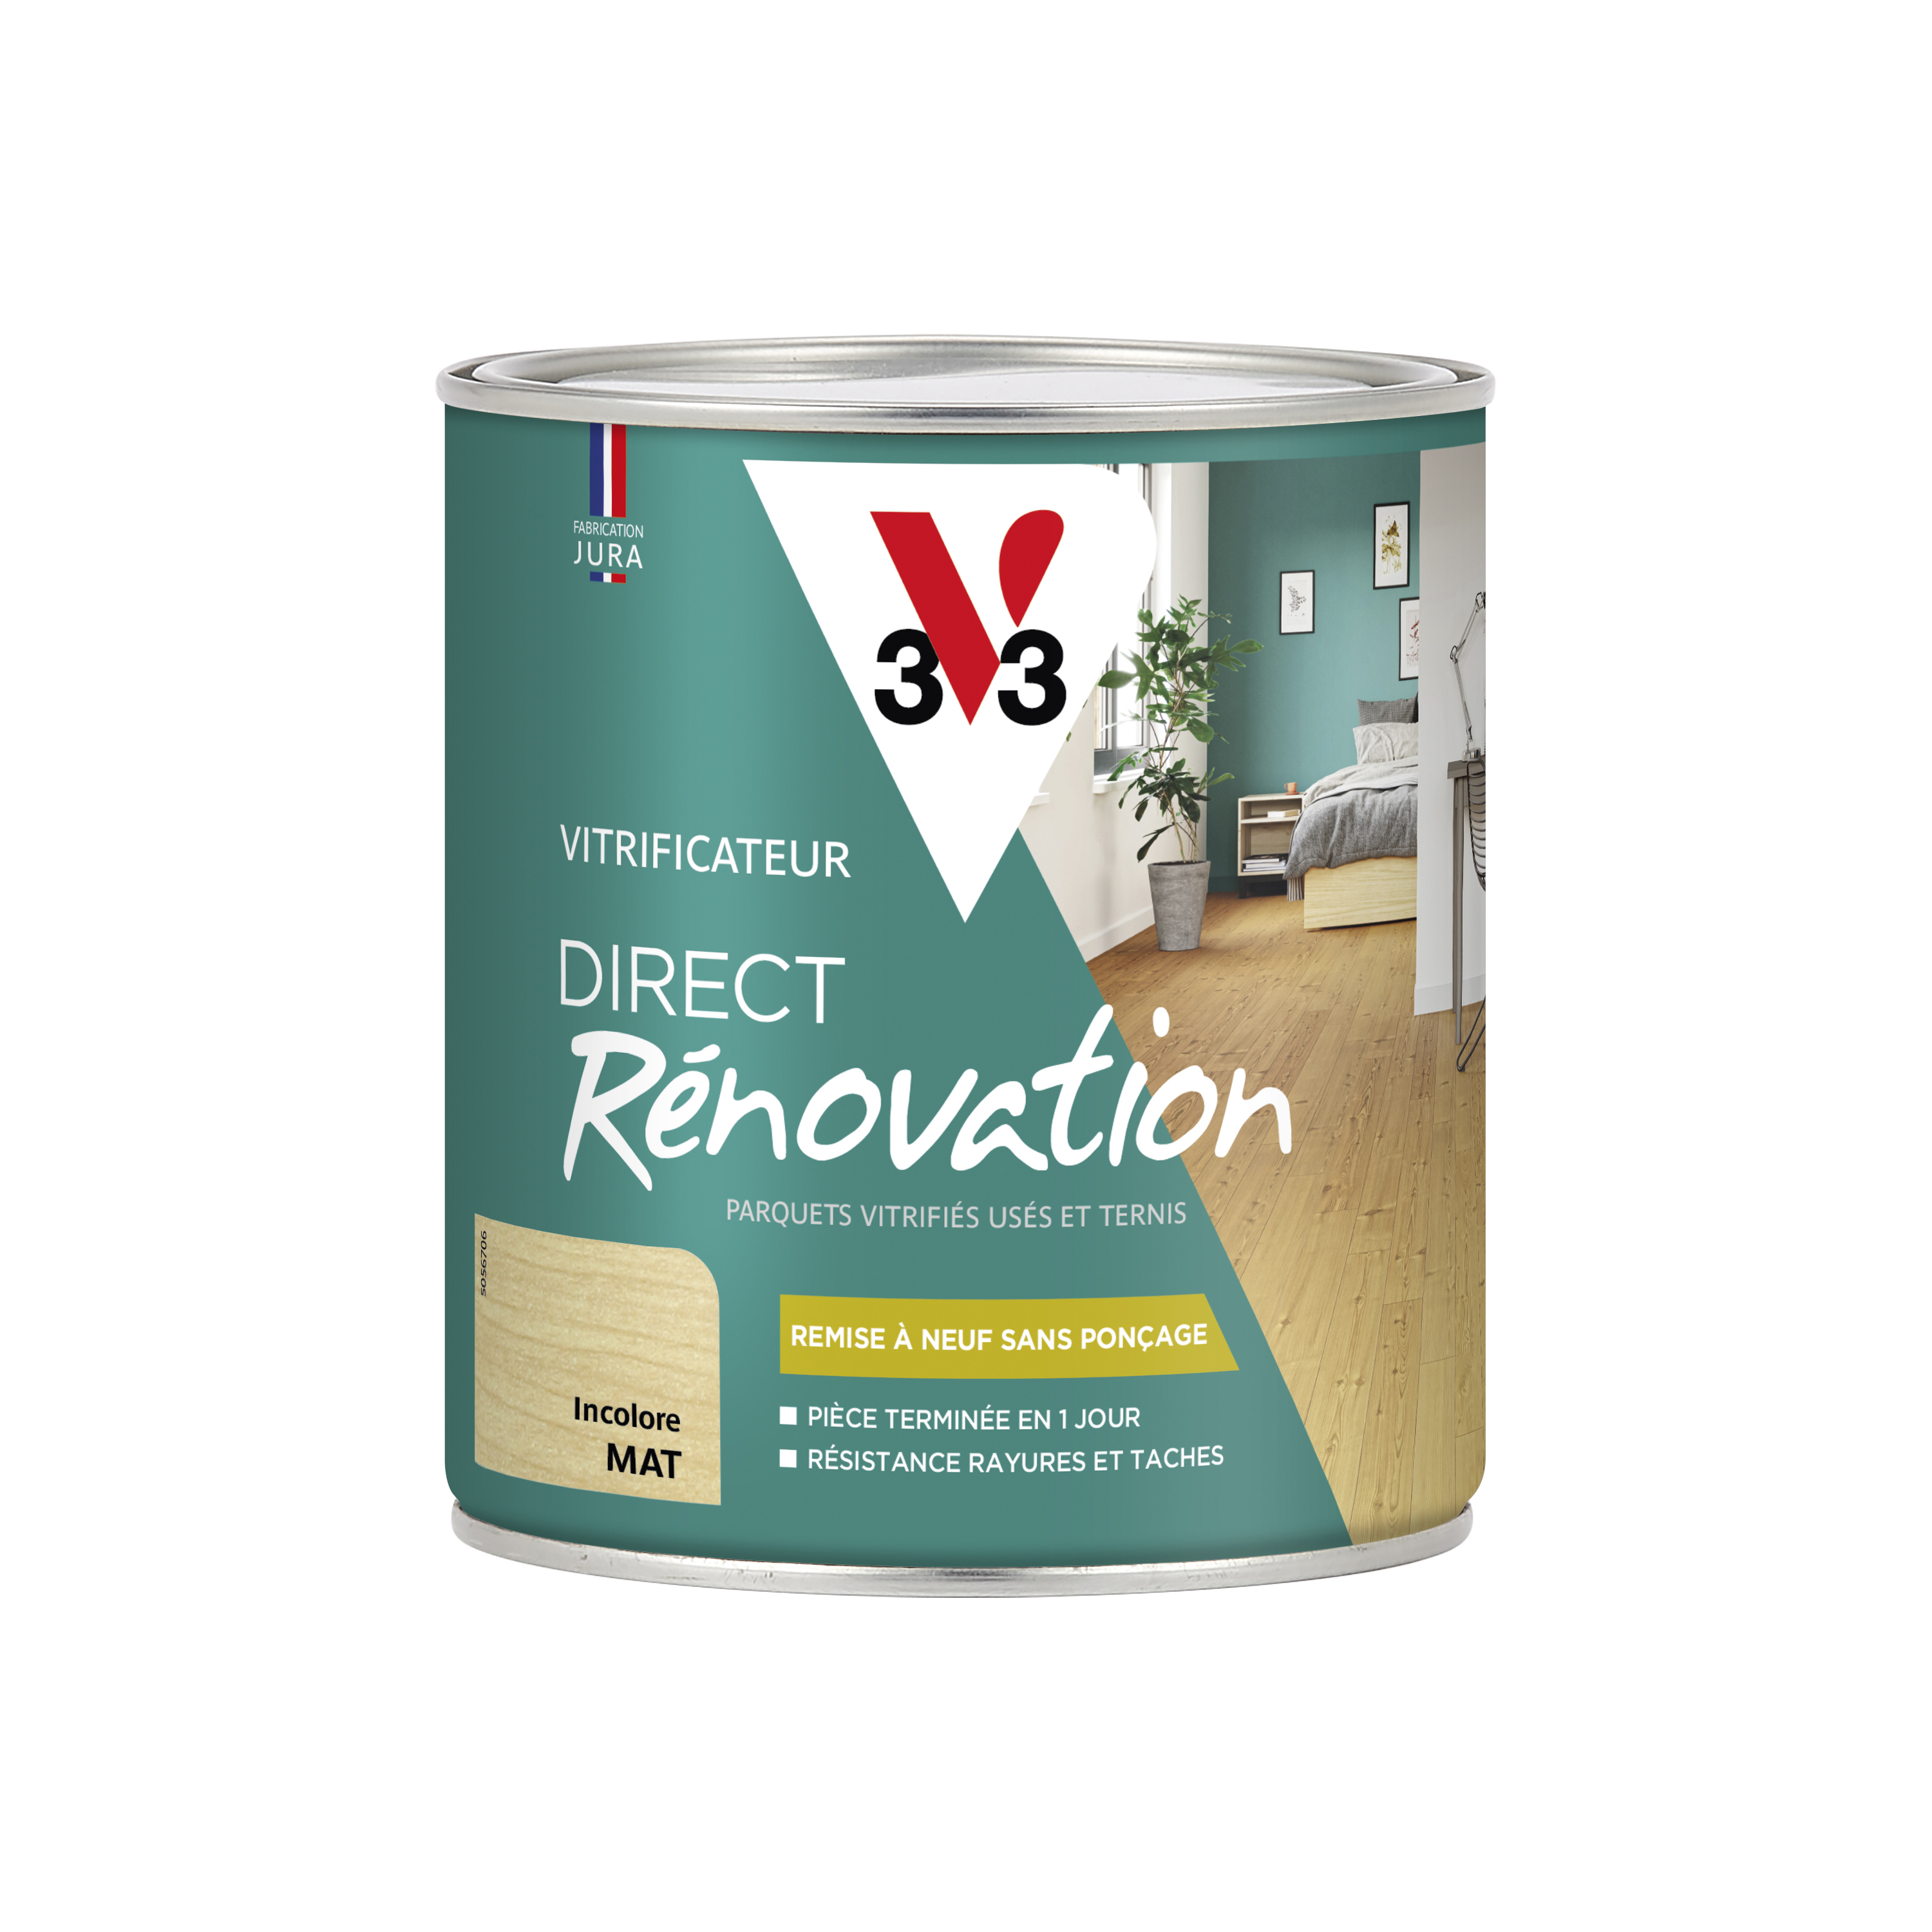 Vitrificateur renovation mat incolore 0,75 L - V33